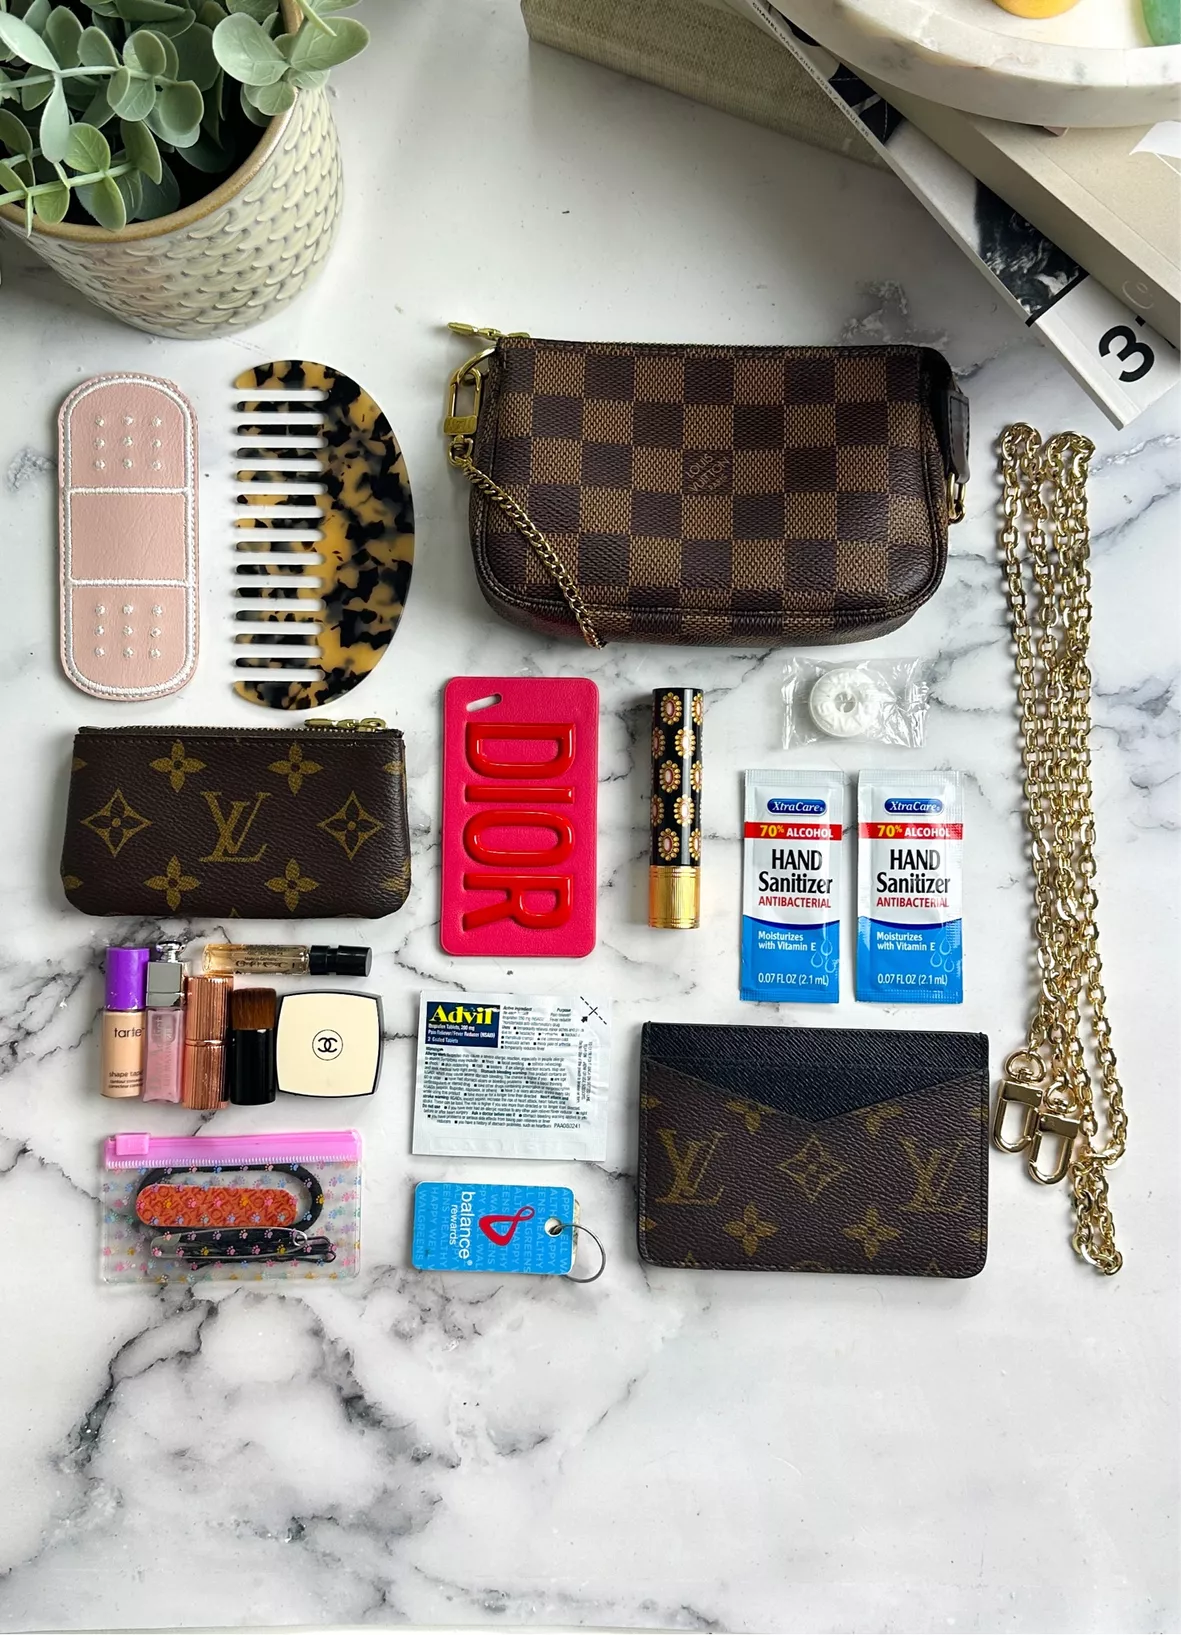 Chanel Flap Bag Lambskin Caviar … curated on LTK